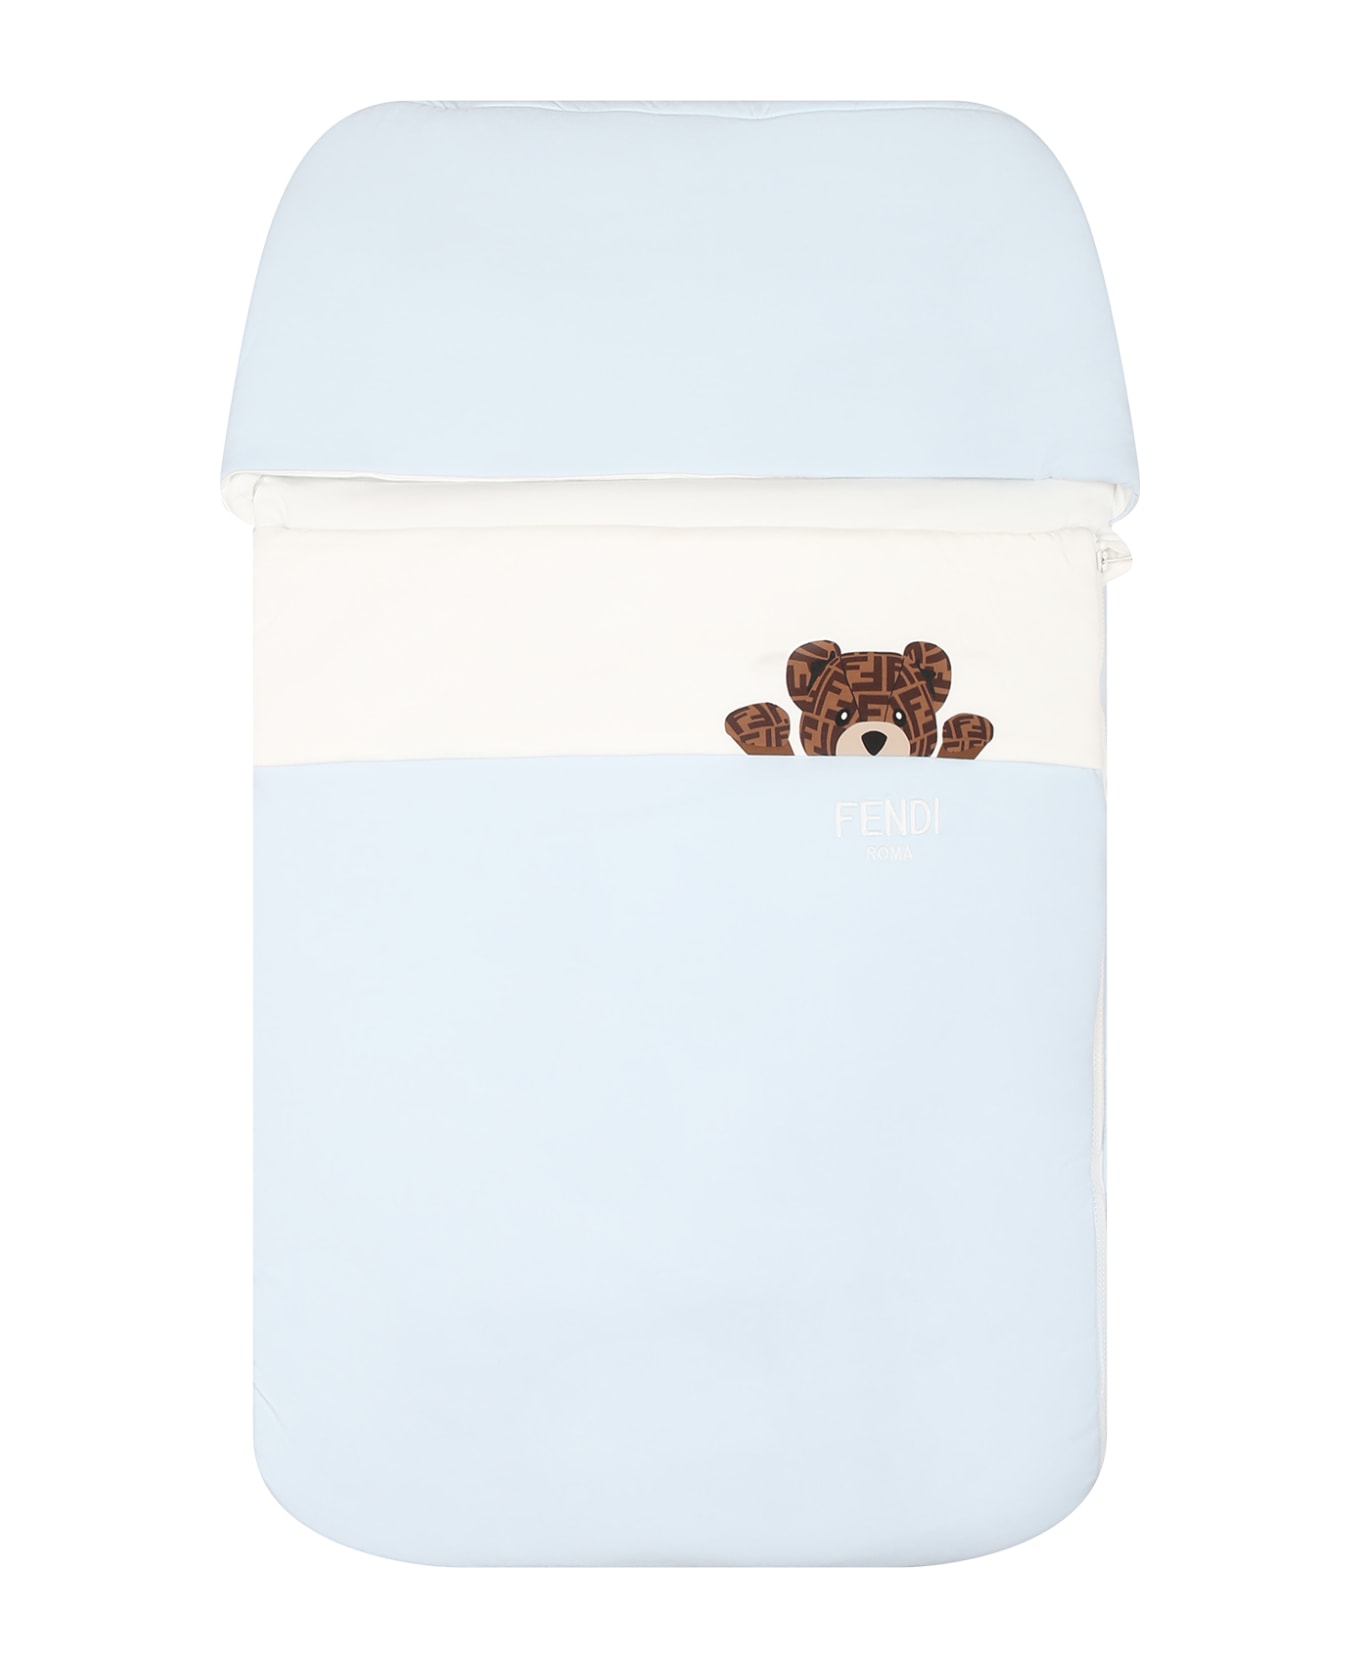 Fendi Light Blue Sleeping Bag For Baby Boy With Bear And Fendi Logo - Light Blue アクセサリー＆ギフト